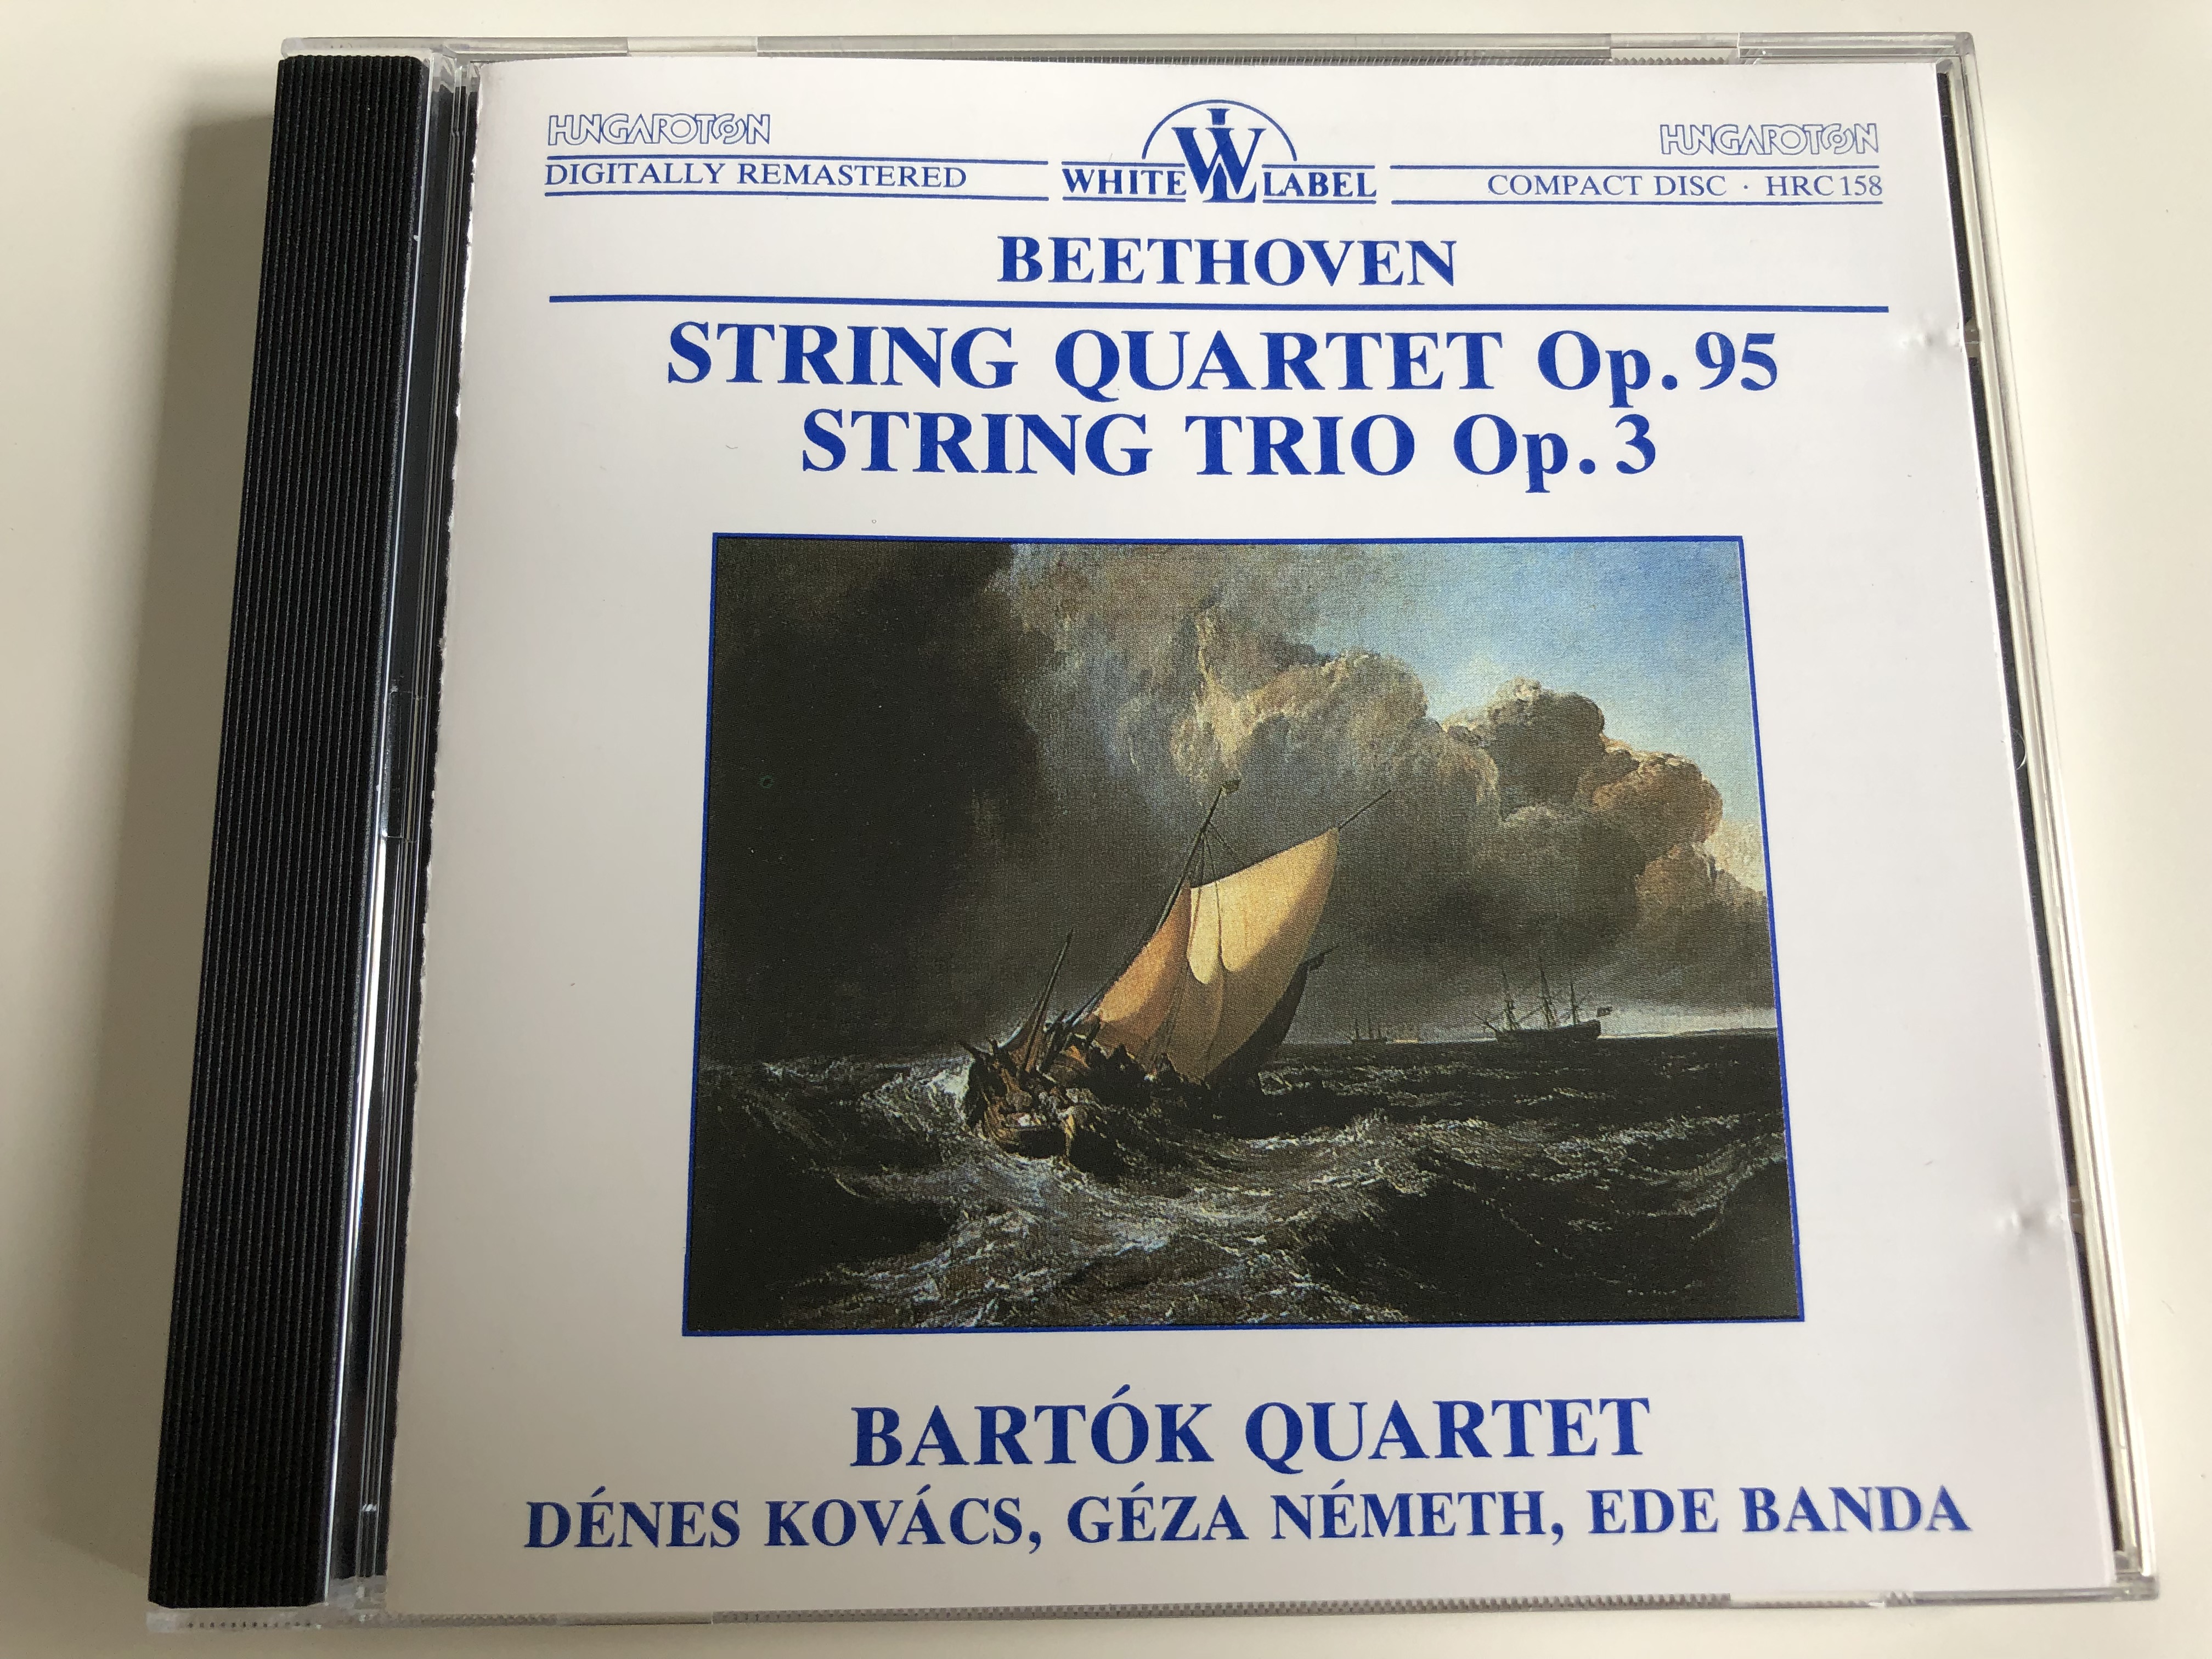 beethoven-string-quartet-op.-95-string-trio-op.-3-bart-k-quartet-d-nes-kov-cs-g-za-n-meth-ede-banda-hungaroton-white-label-hrc-158-audio-cd-1990-1-.jpg